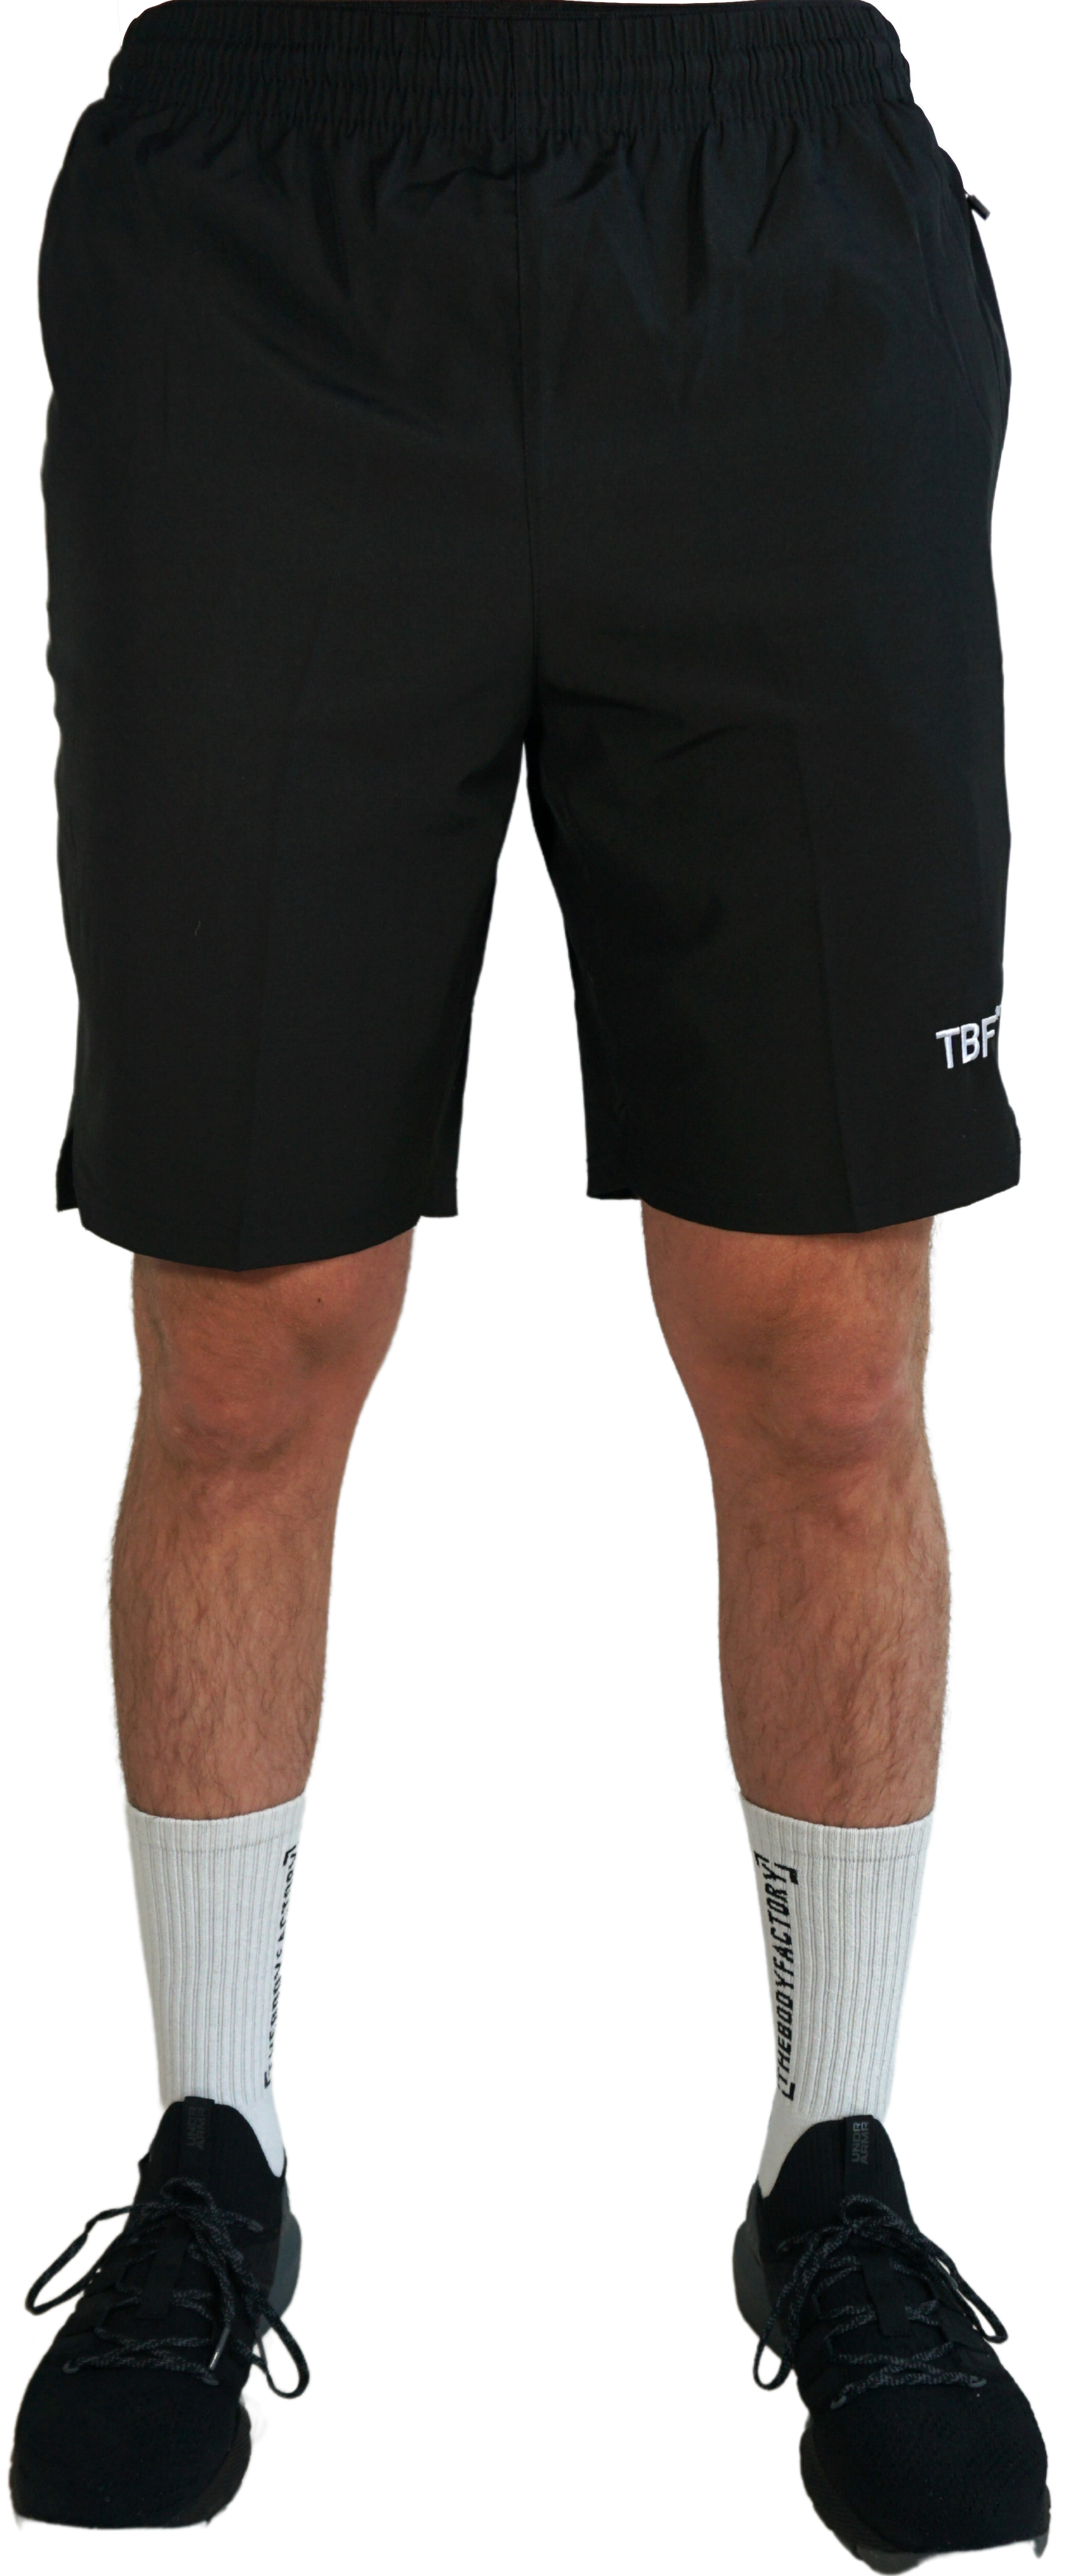 tbf performance shorts